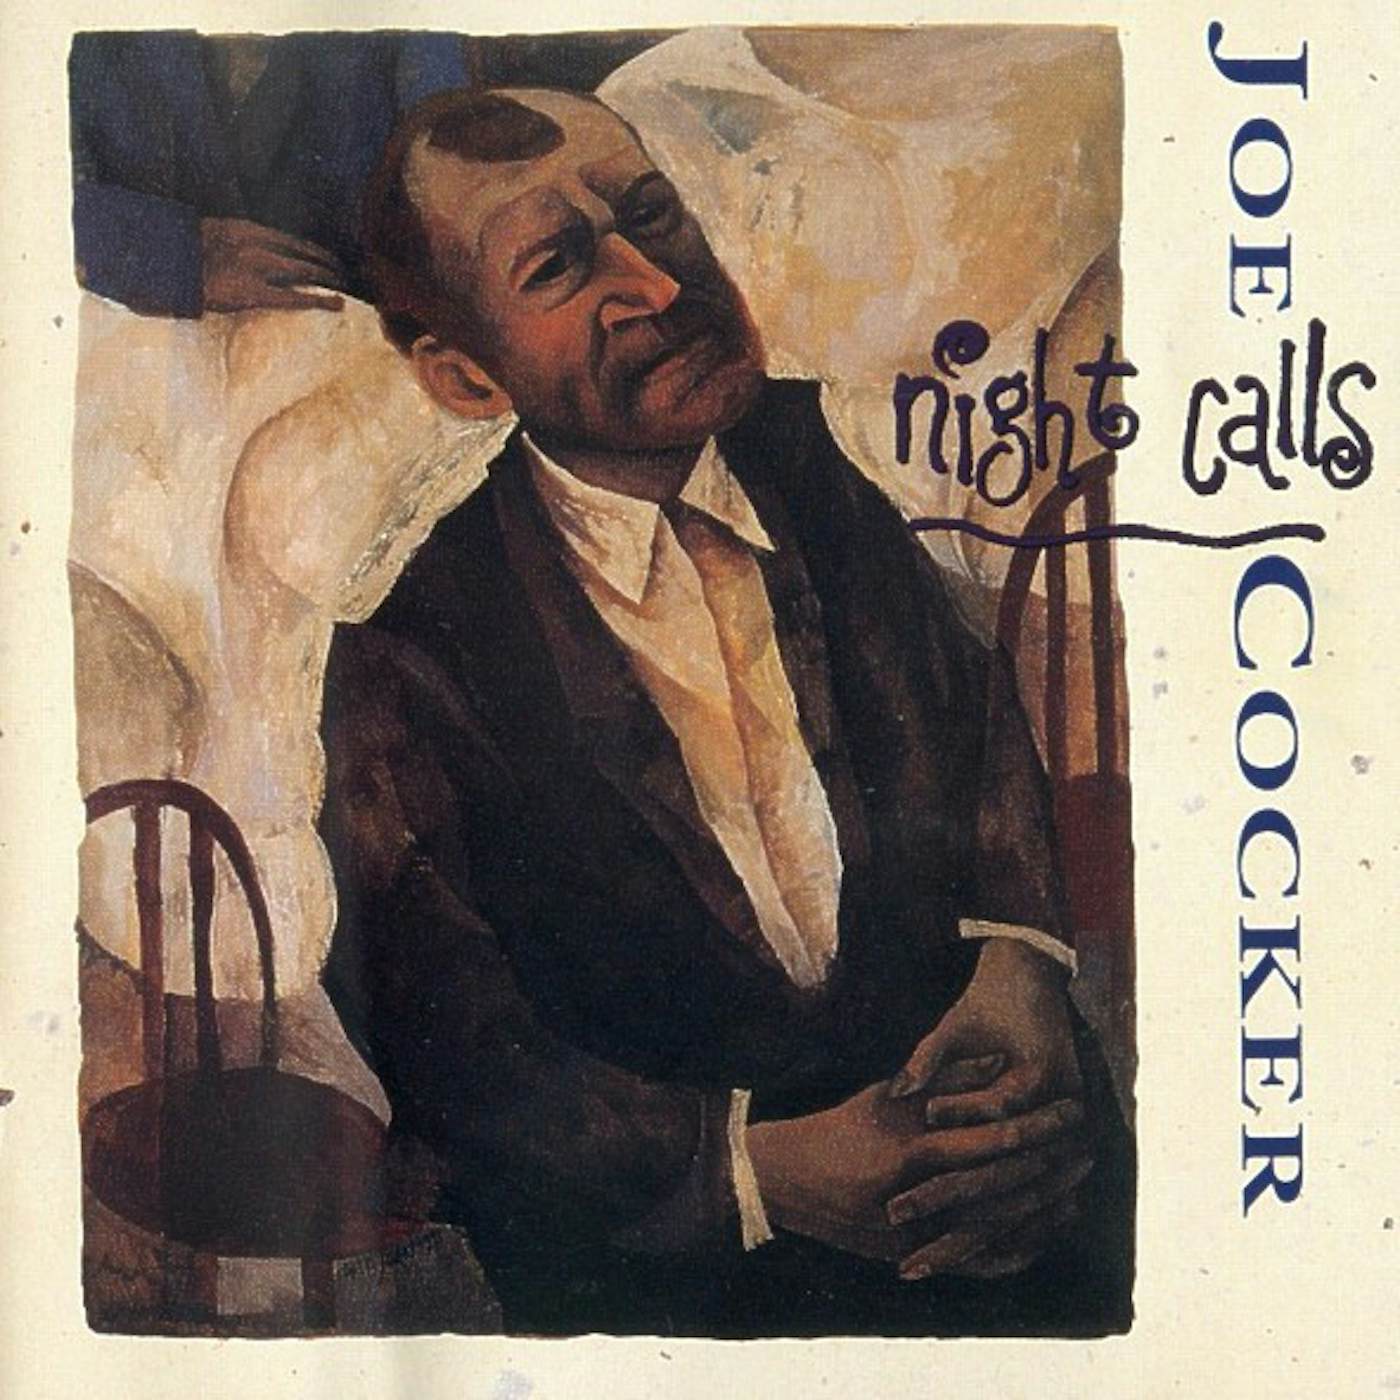 Joe Cocker NIGHT CALLS CD